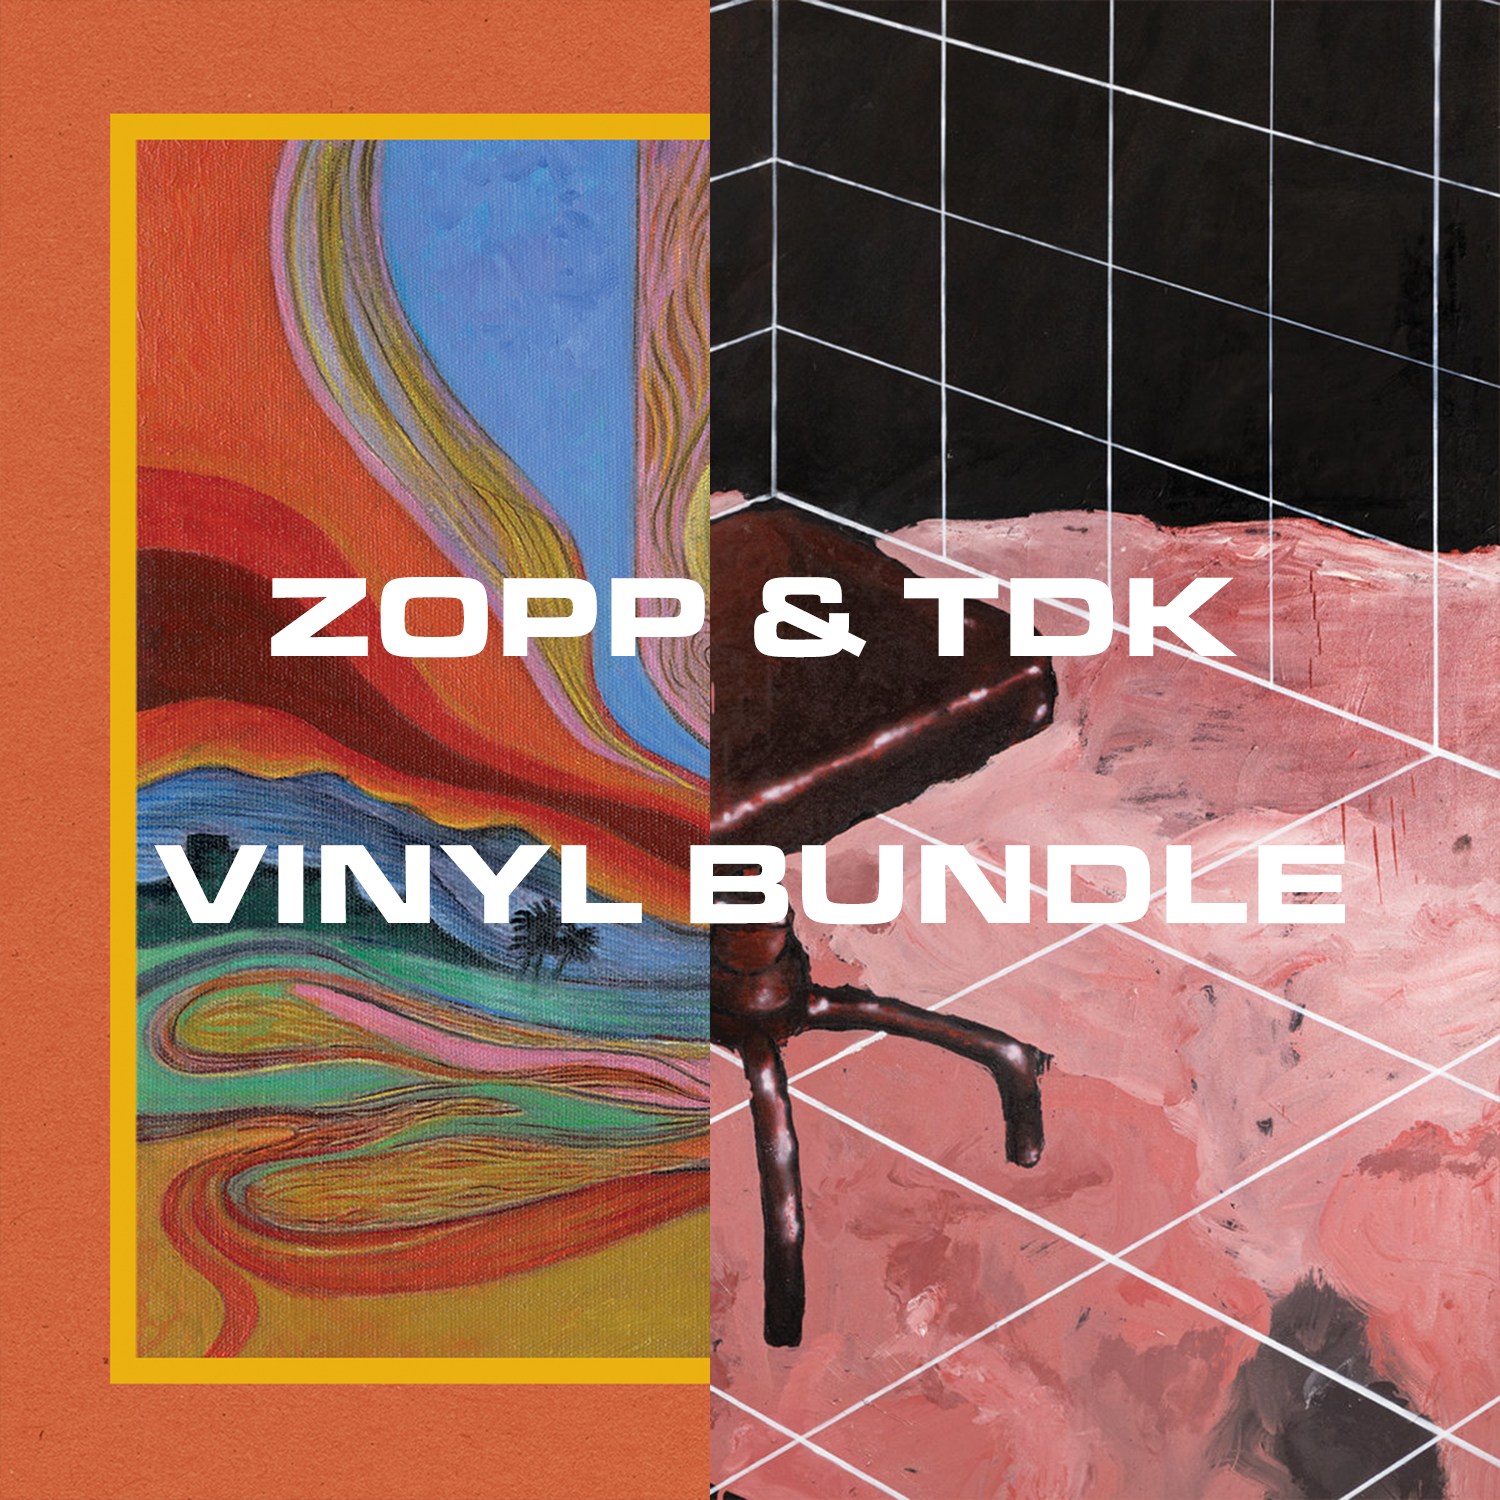 Zopp & TDK VINYL BUNDLE – Repose Records